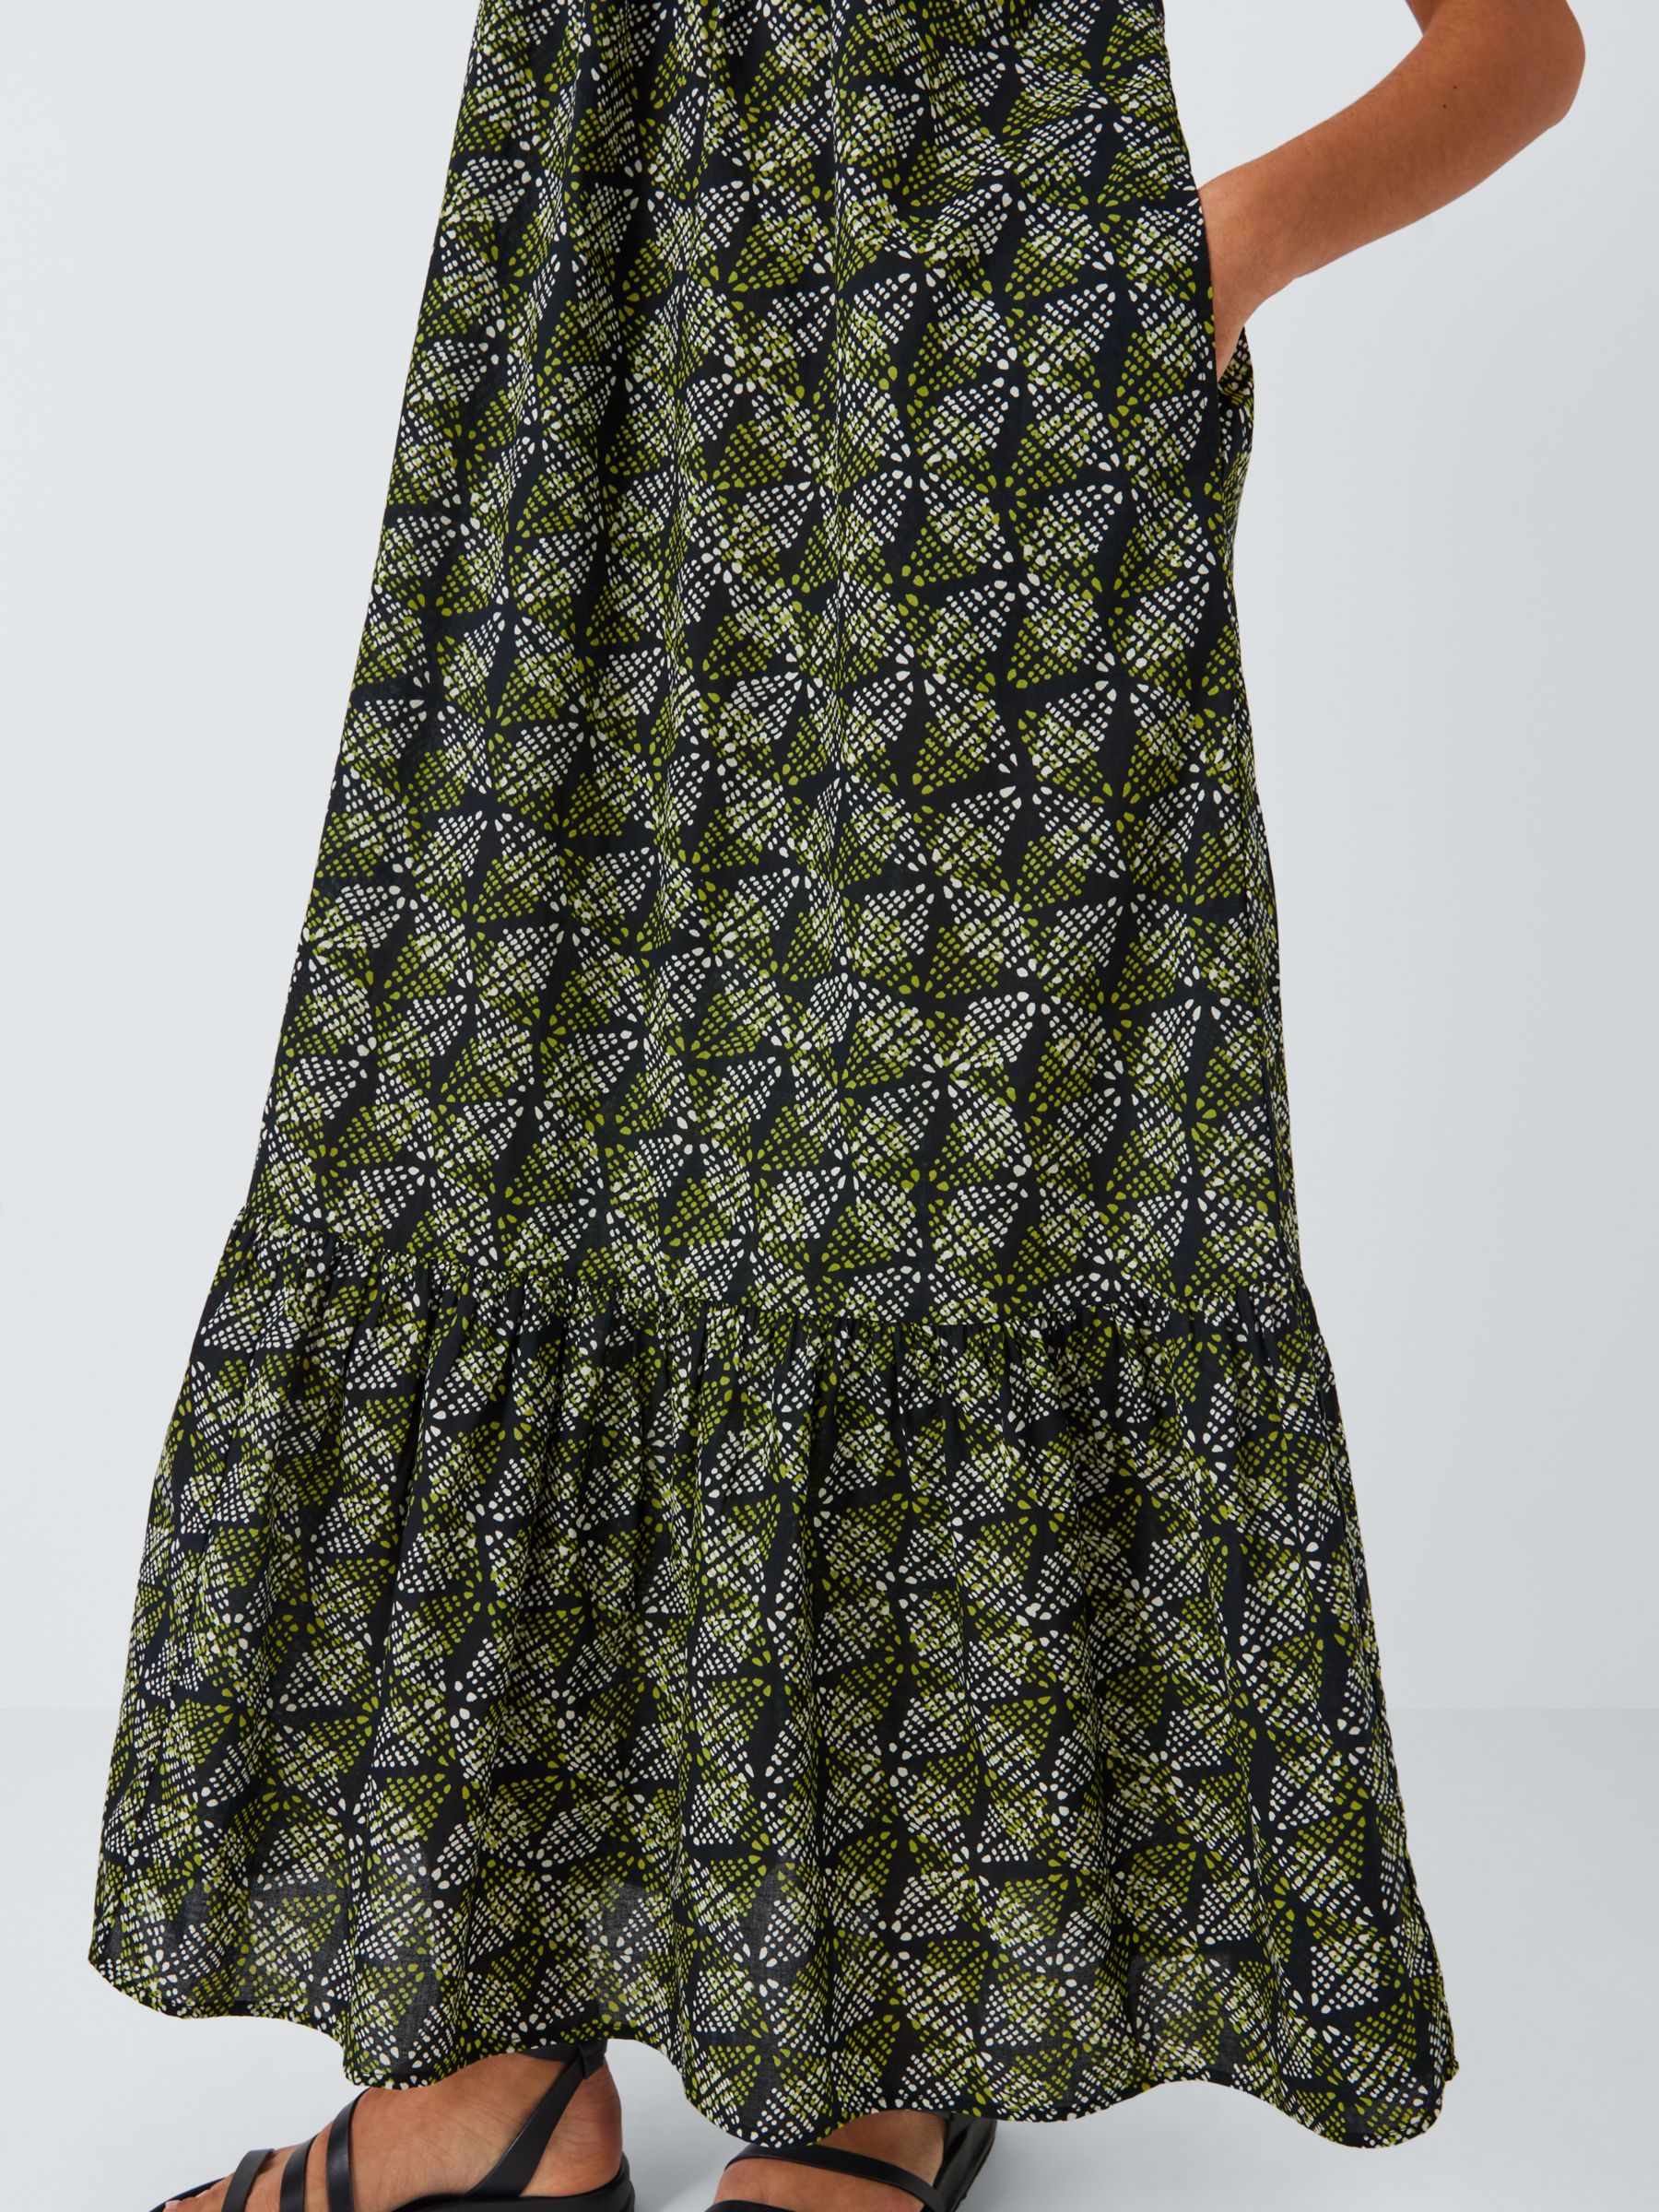 John Lewis ANYDAY Geometric Strappy Maxi Dress, Black/Multi, 10